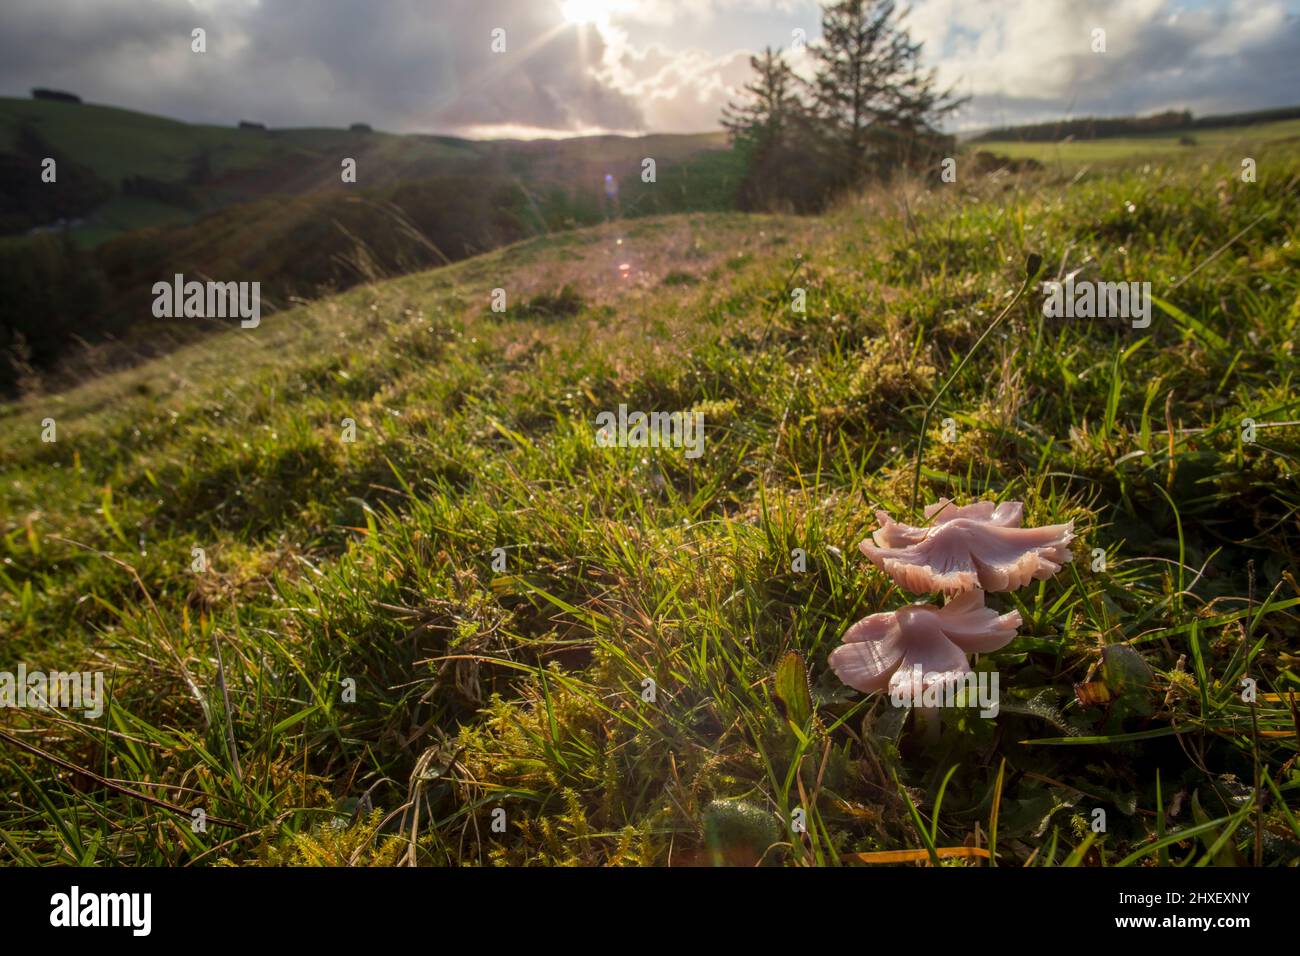 Rosa Wachskappe oder rosa Ballerina-Pilz (Porpolomopsis calyptriformis) Fruchtkörper, die im Grasland wachsen. Pwys, Wales. Oktober. Stockfoto